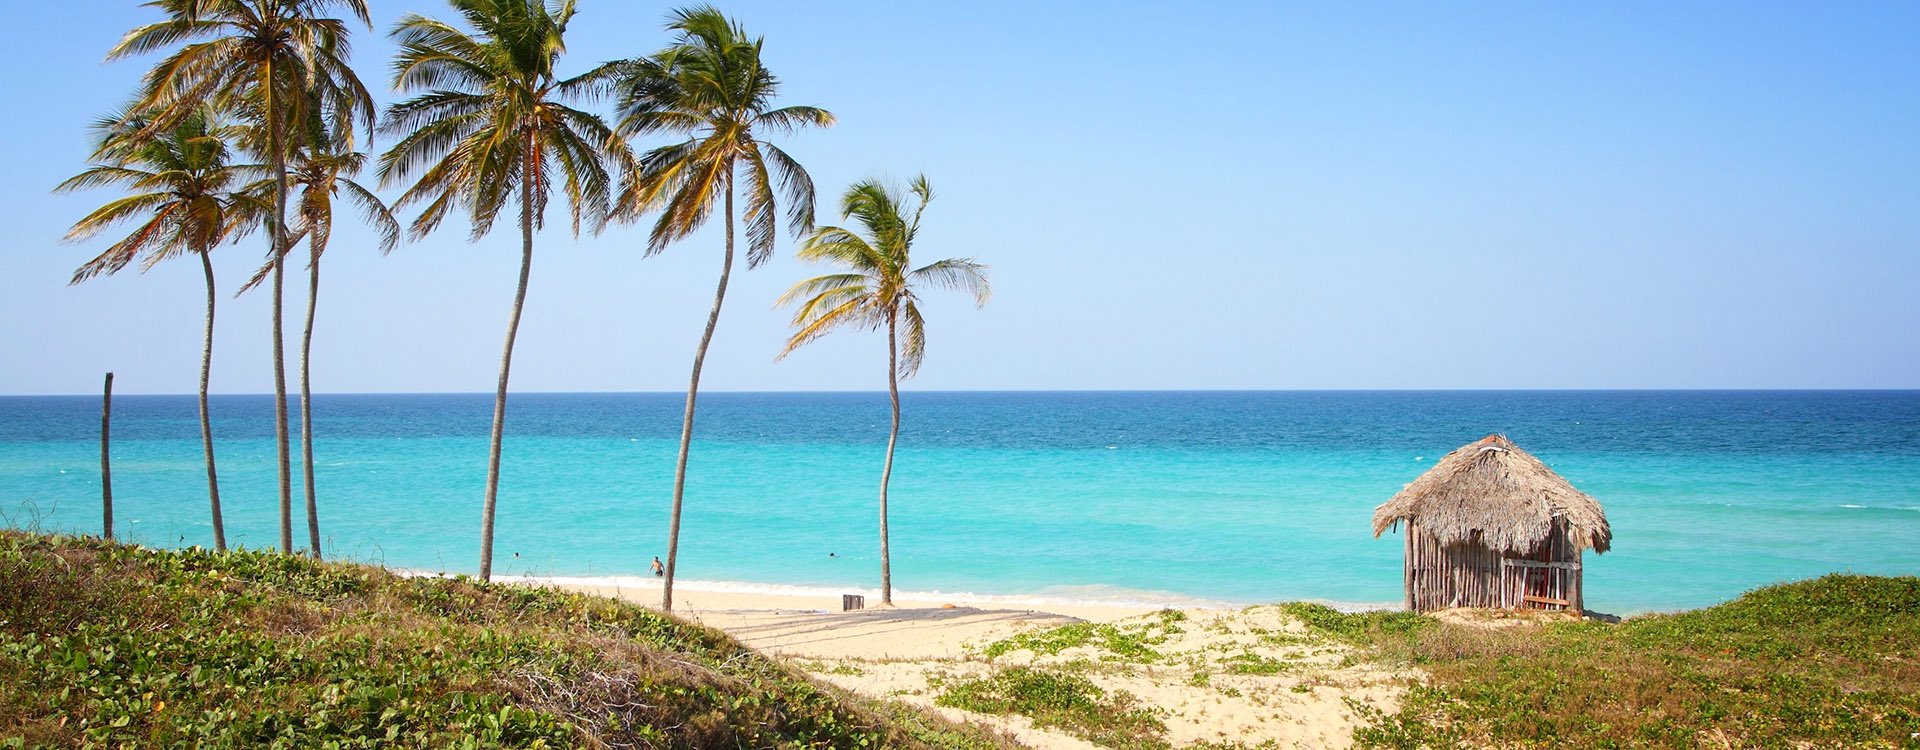 Cuba - Caribbean beach Playa Megano in Playas del Este part of Havana Province. Sandy coast